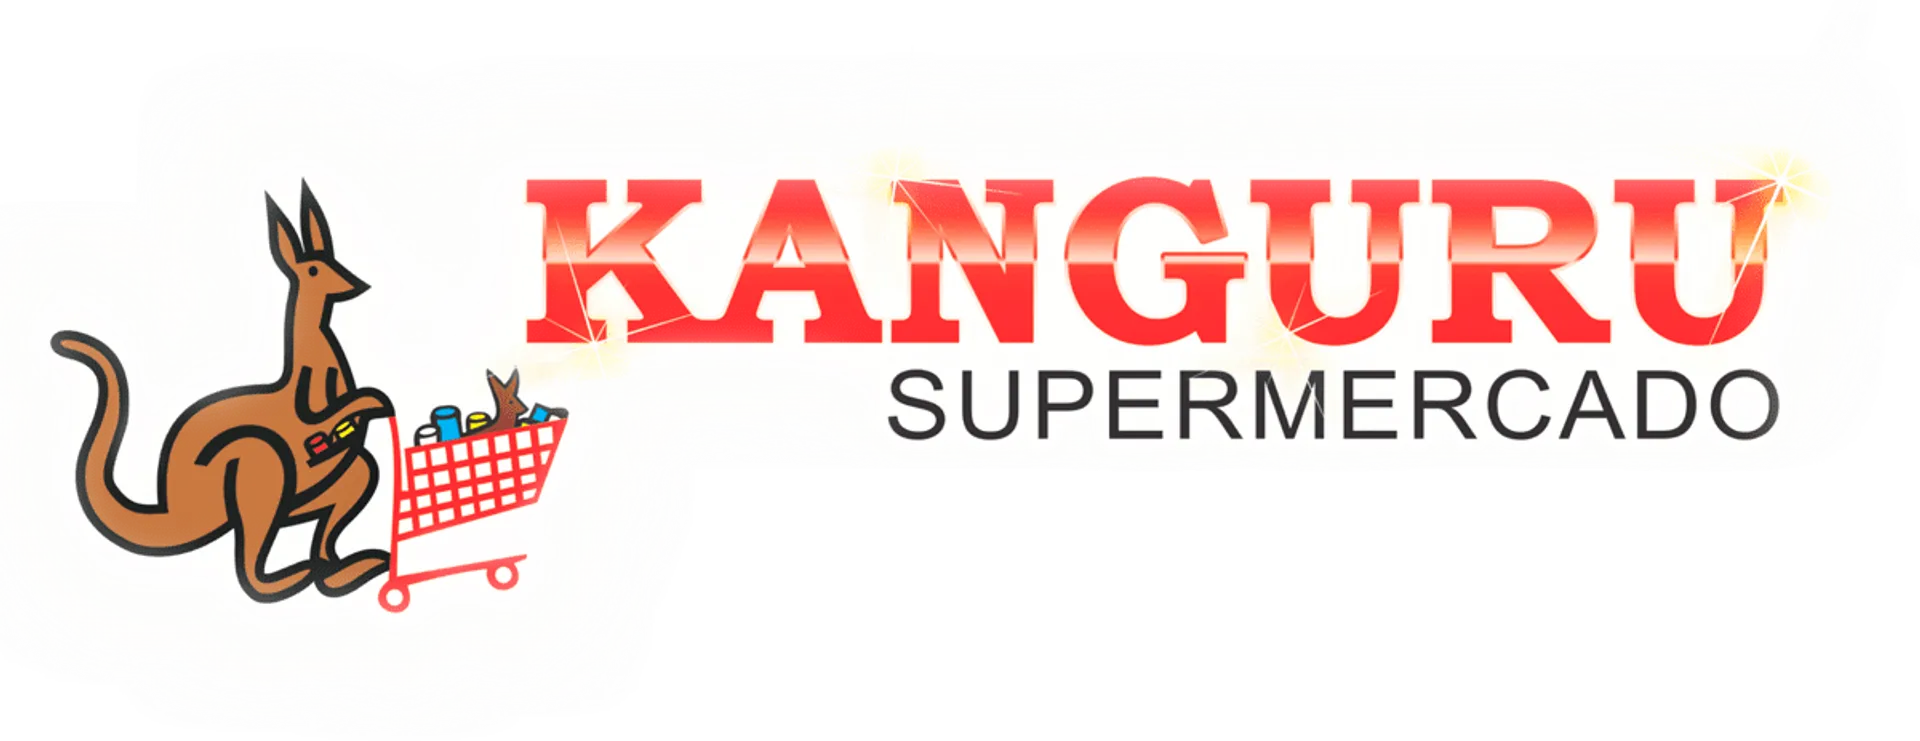 KANGURU SUPERMERCADO logo